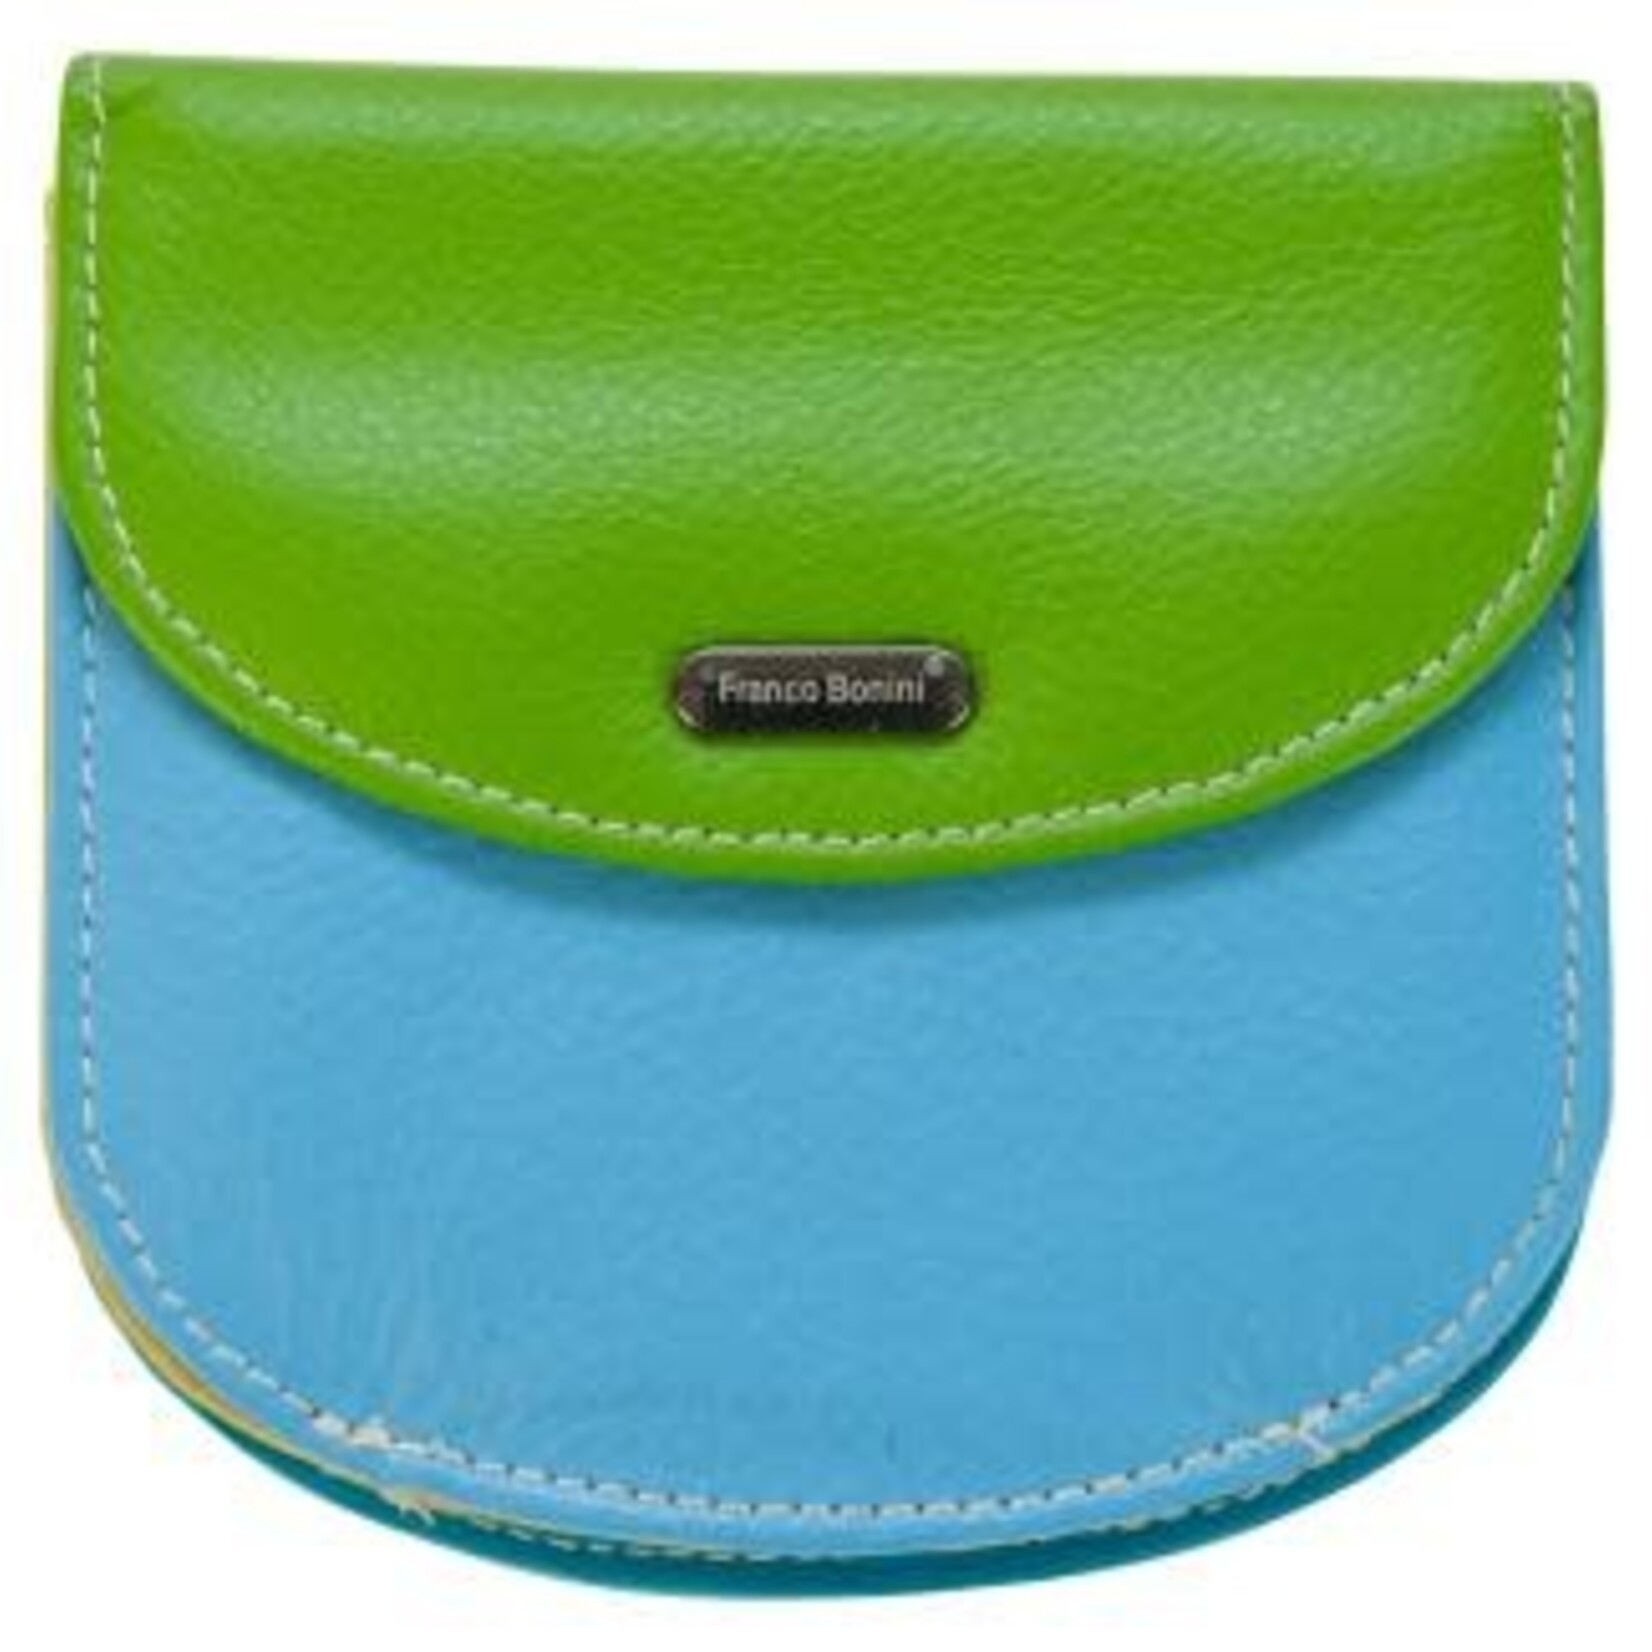 Franco Bonini - 12-221 Leather Shoulder Bag - Orange/Multi – Bags To Go